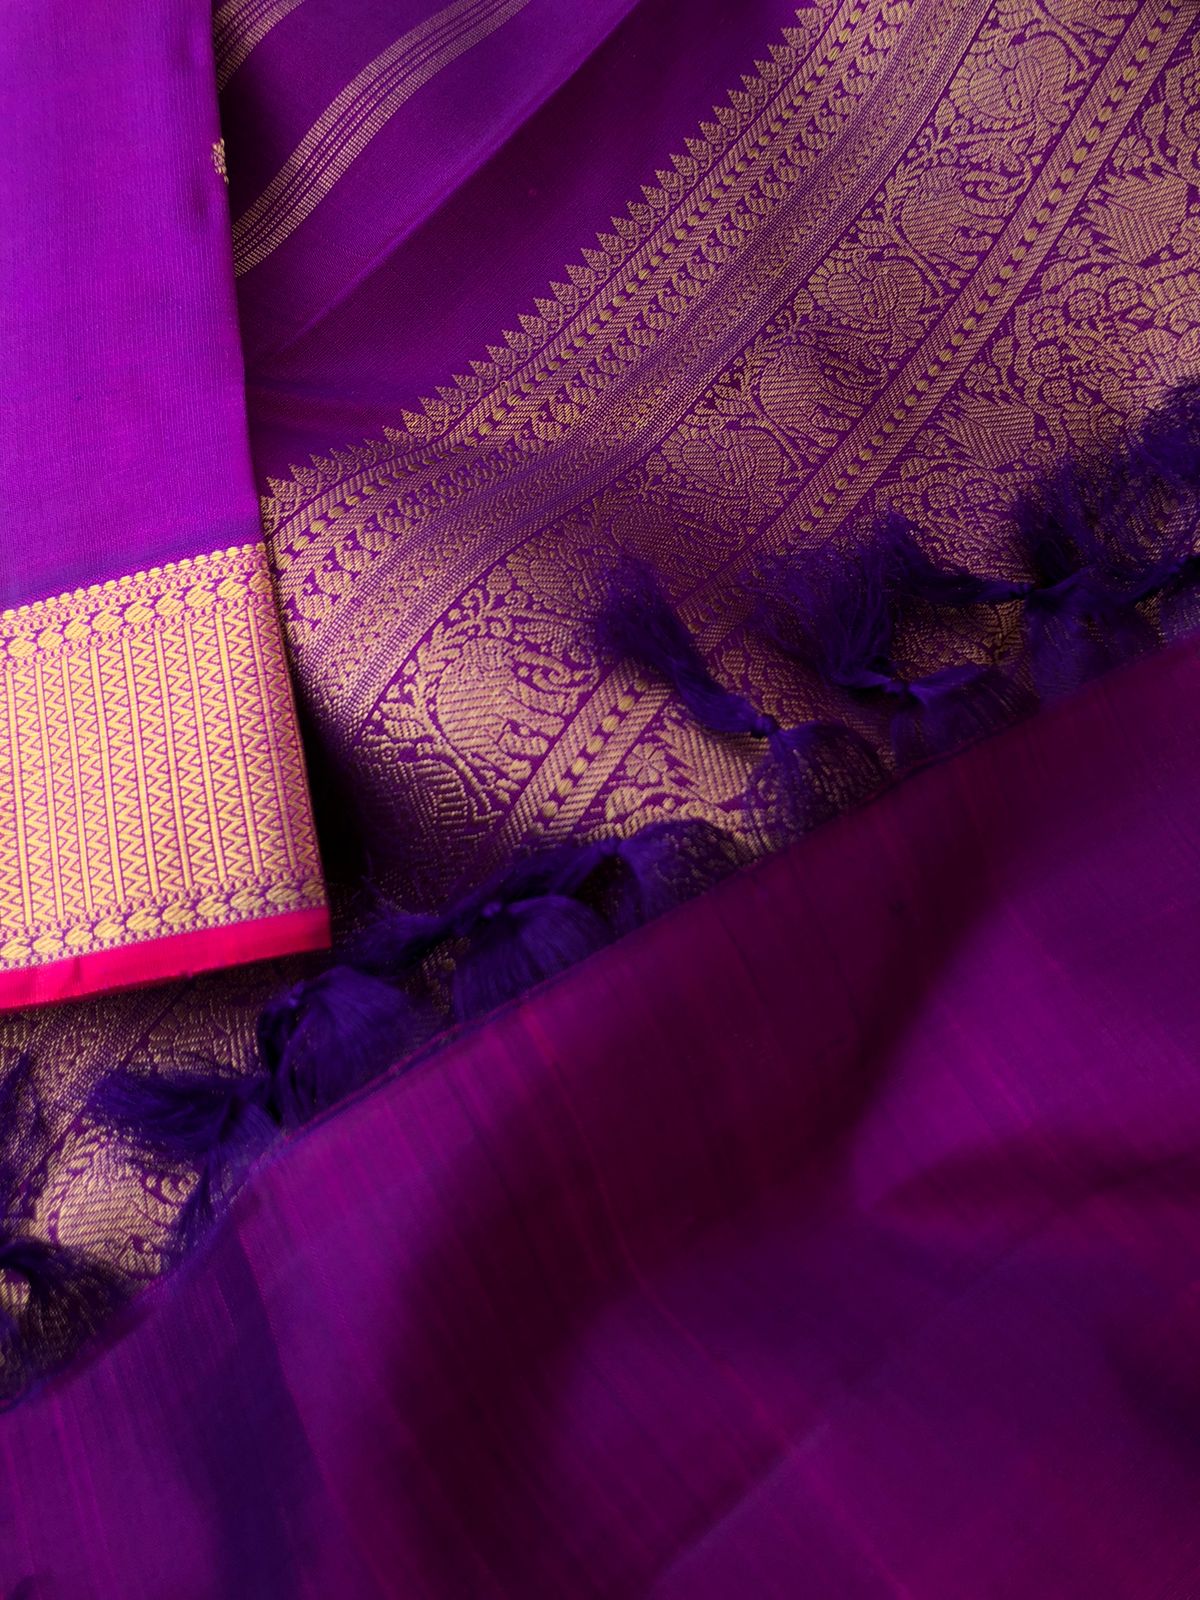 Festive Edits on Kanchivaram - the most beautiful vada malli purple with gorgeous intricate woven pallu with kamalam buttas over the body